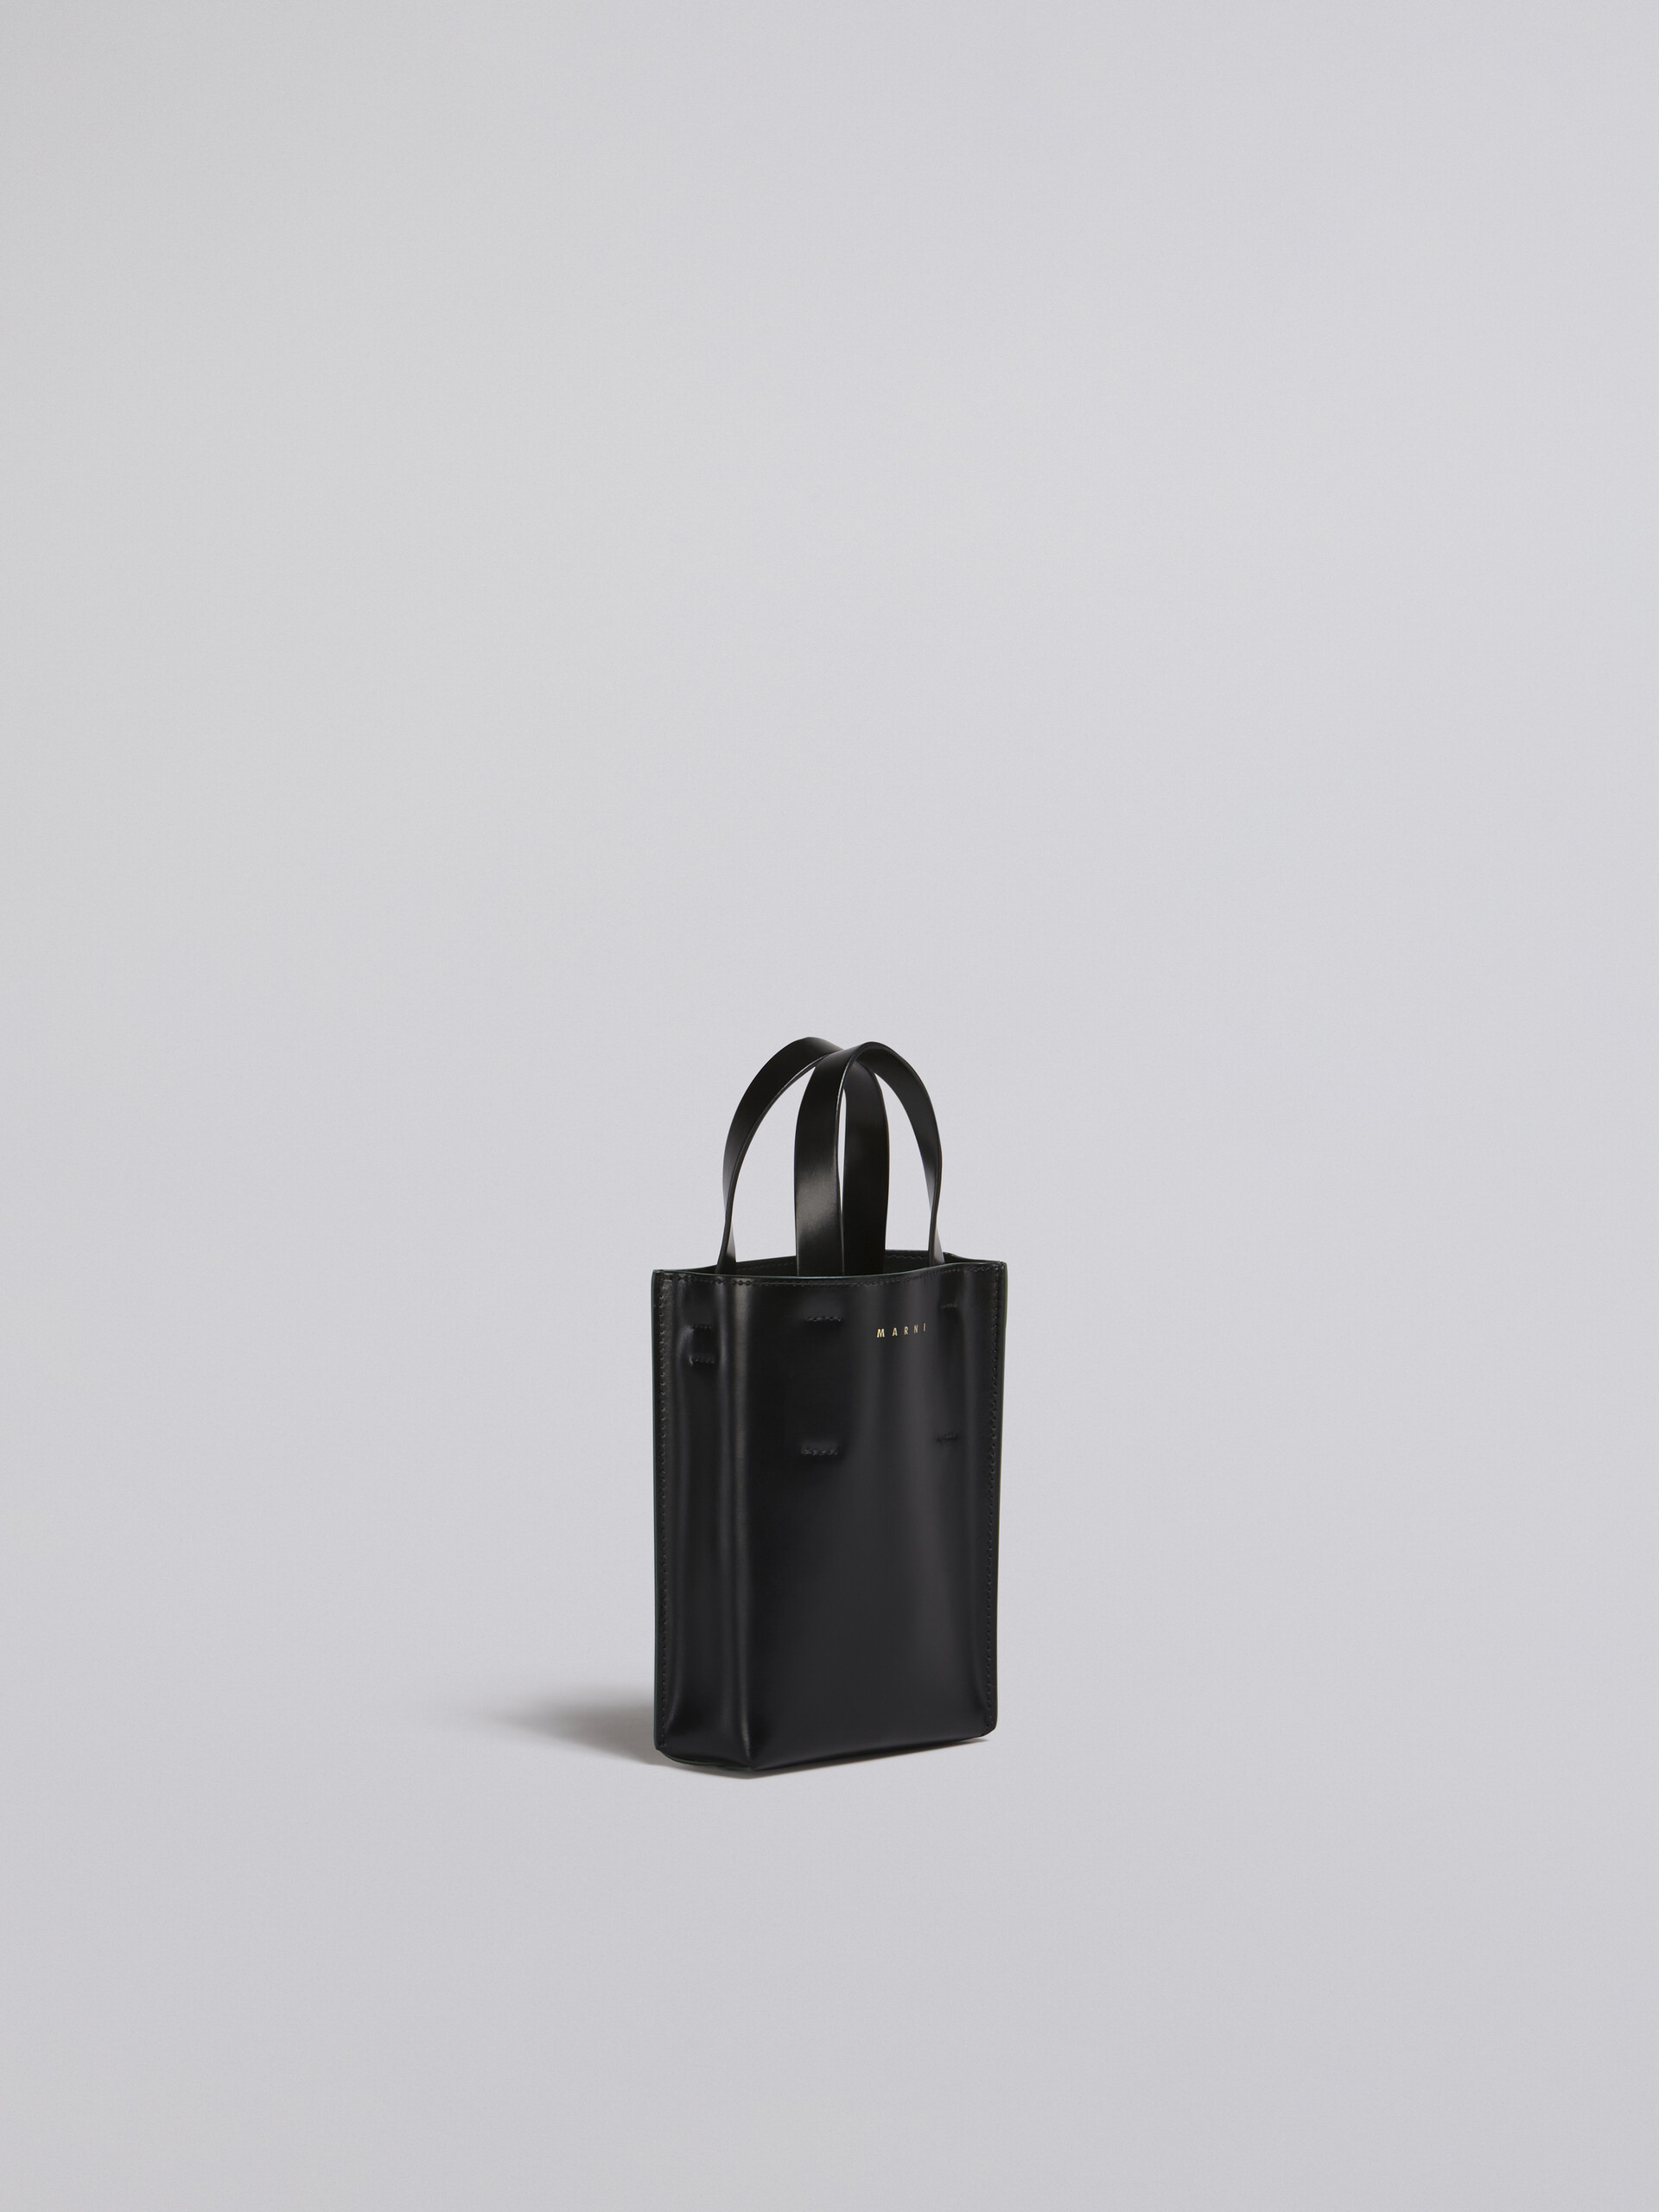 Borsa shopping MUSEO nano in vitello liscio lucido nero con tracolla - Borse shopping - Image 4